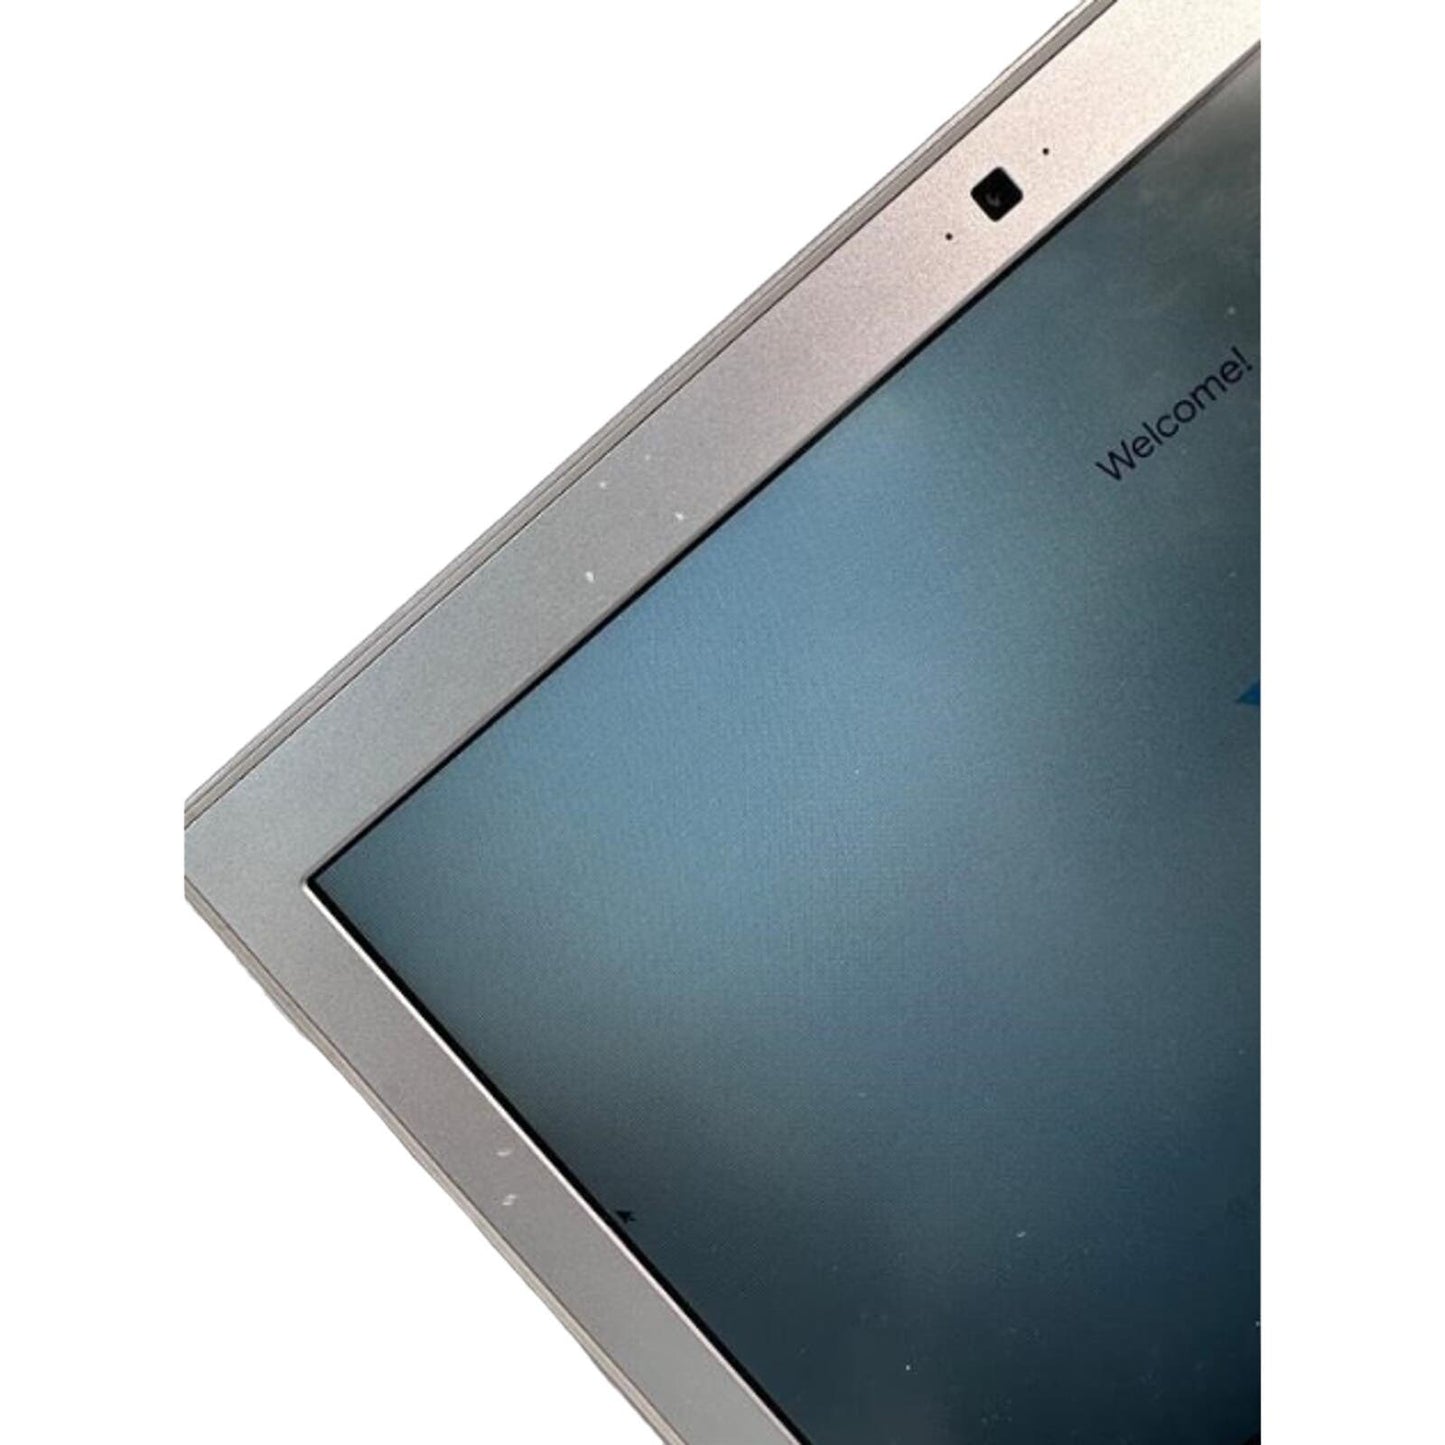 Samsung Chromebook Series 2 XE500C12-K02US Intel Celeron, 11.6inch *Read Disc*